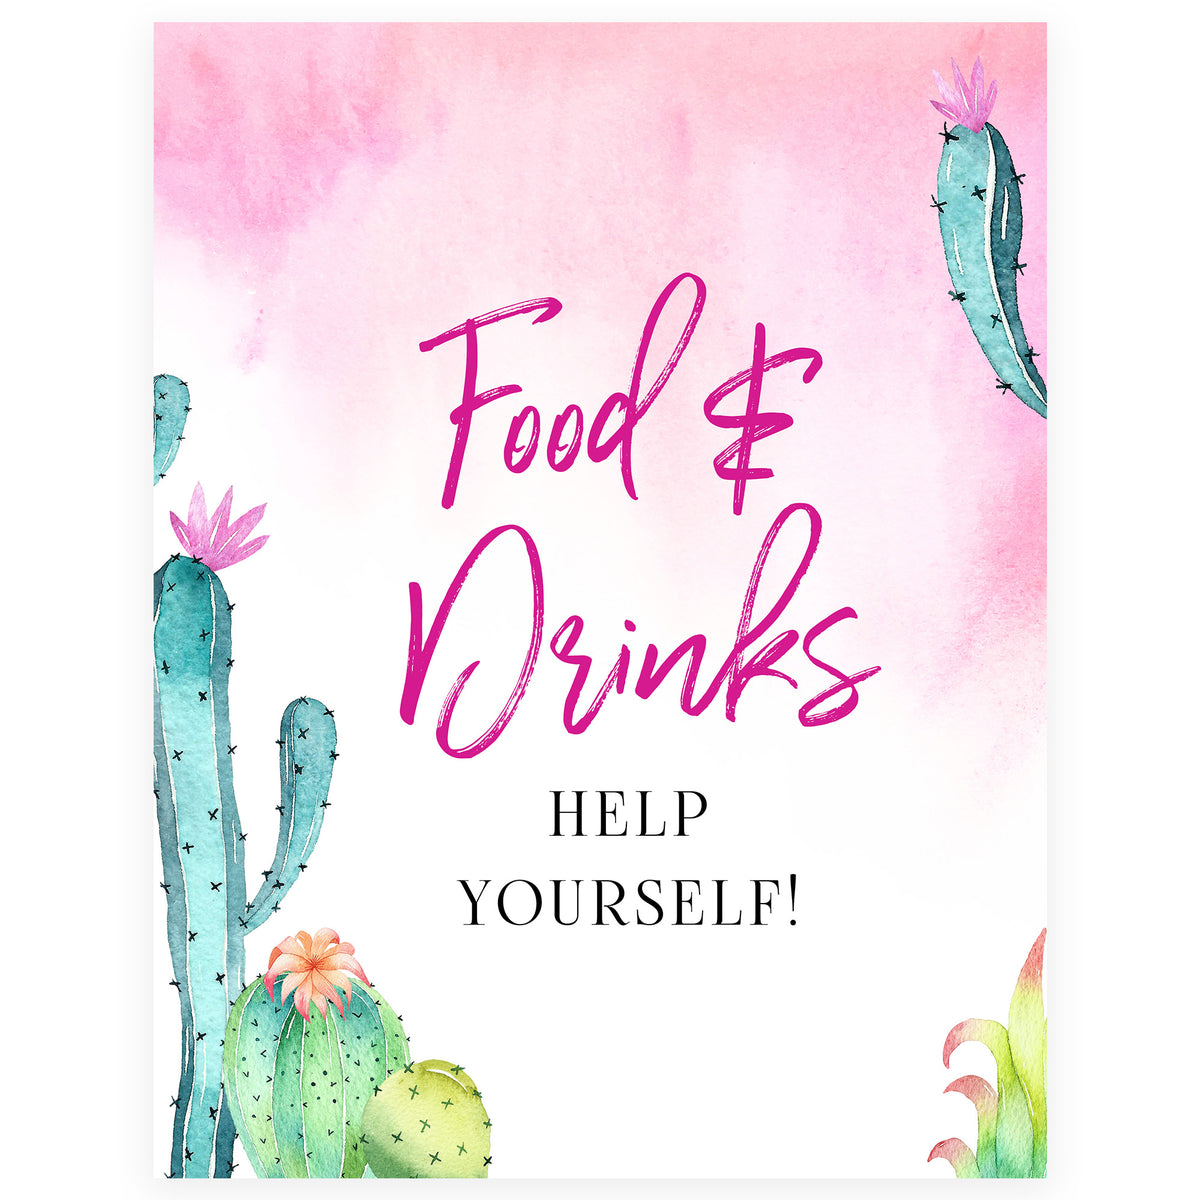 Food & Drinks Table Sign - Fiesta